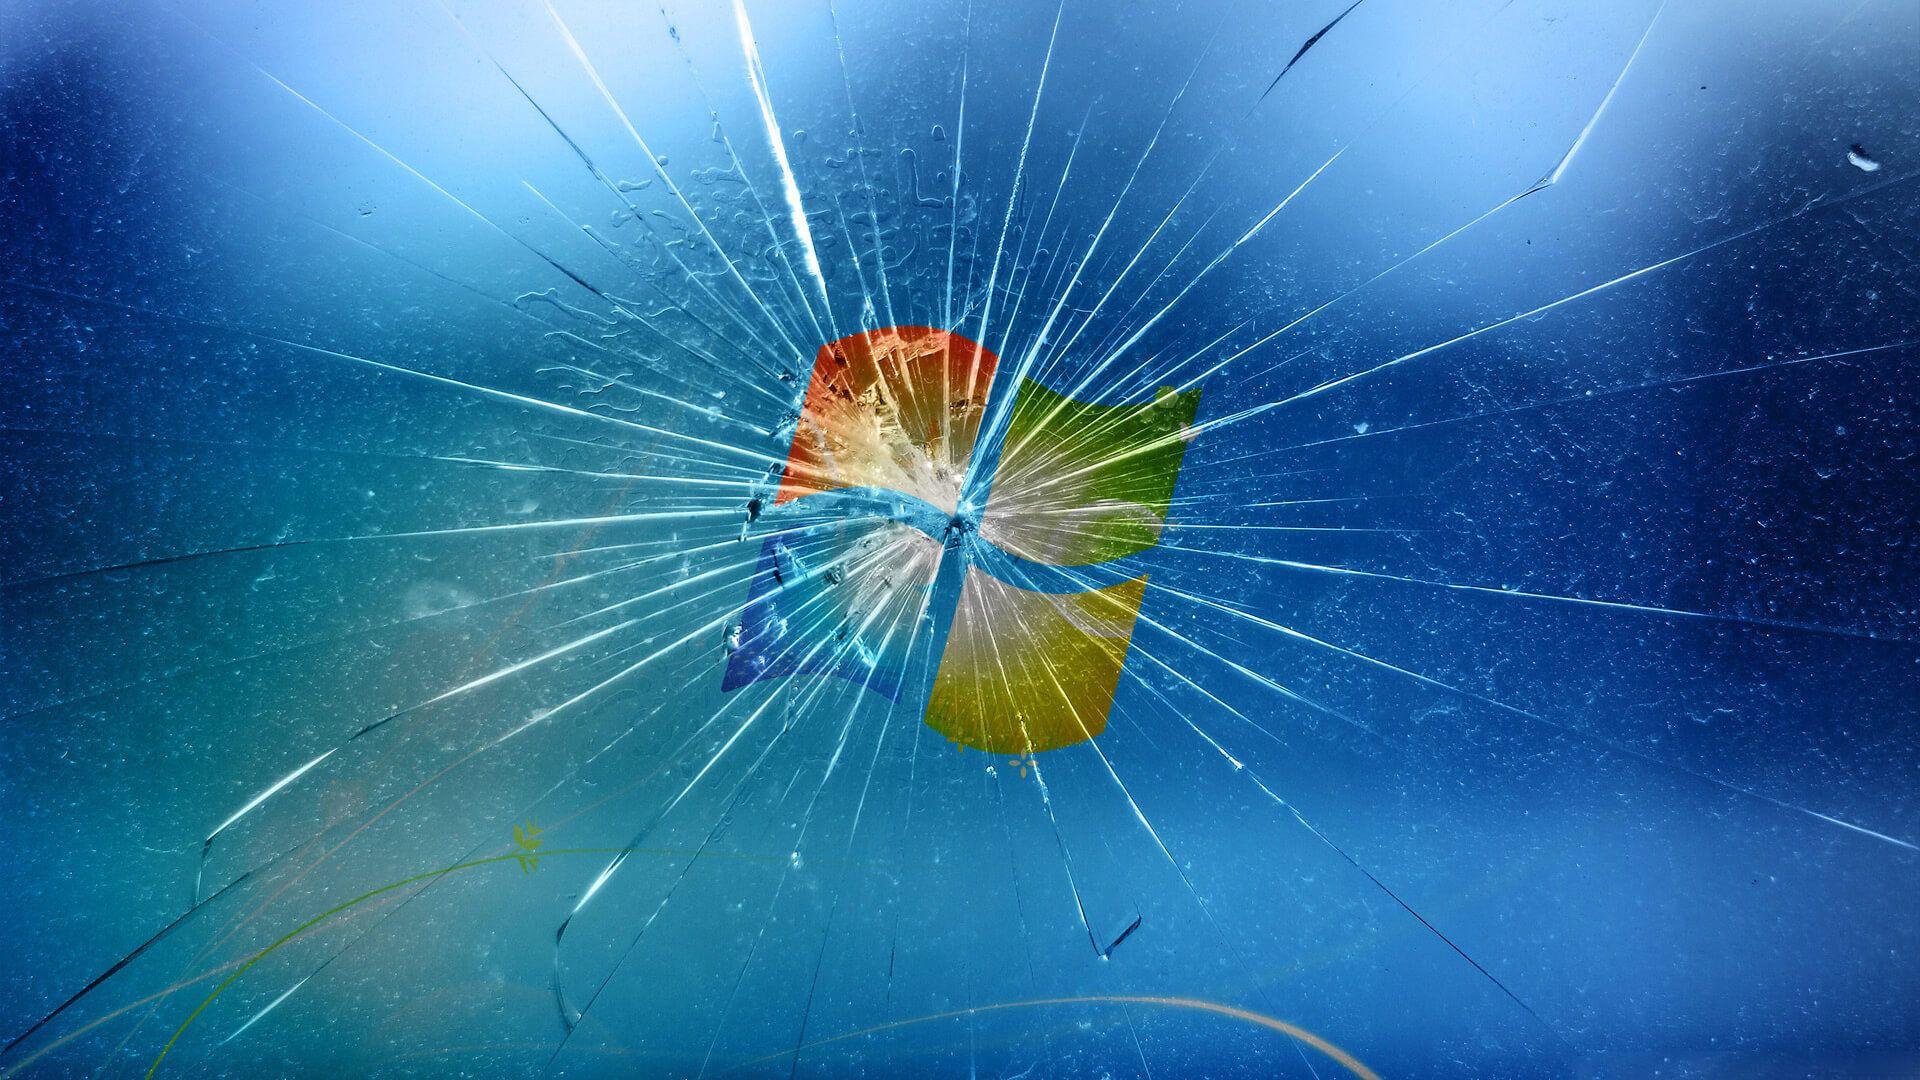 Windows 1.0 Wallpaper image. Broken screen wallpaper